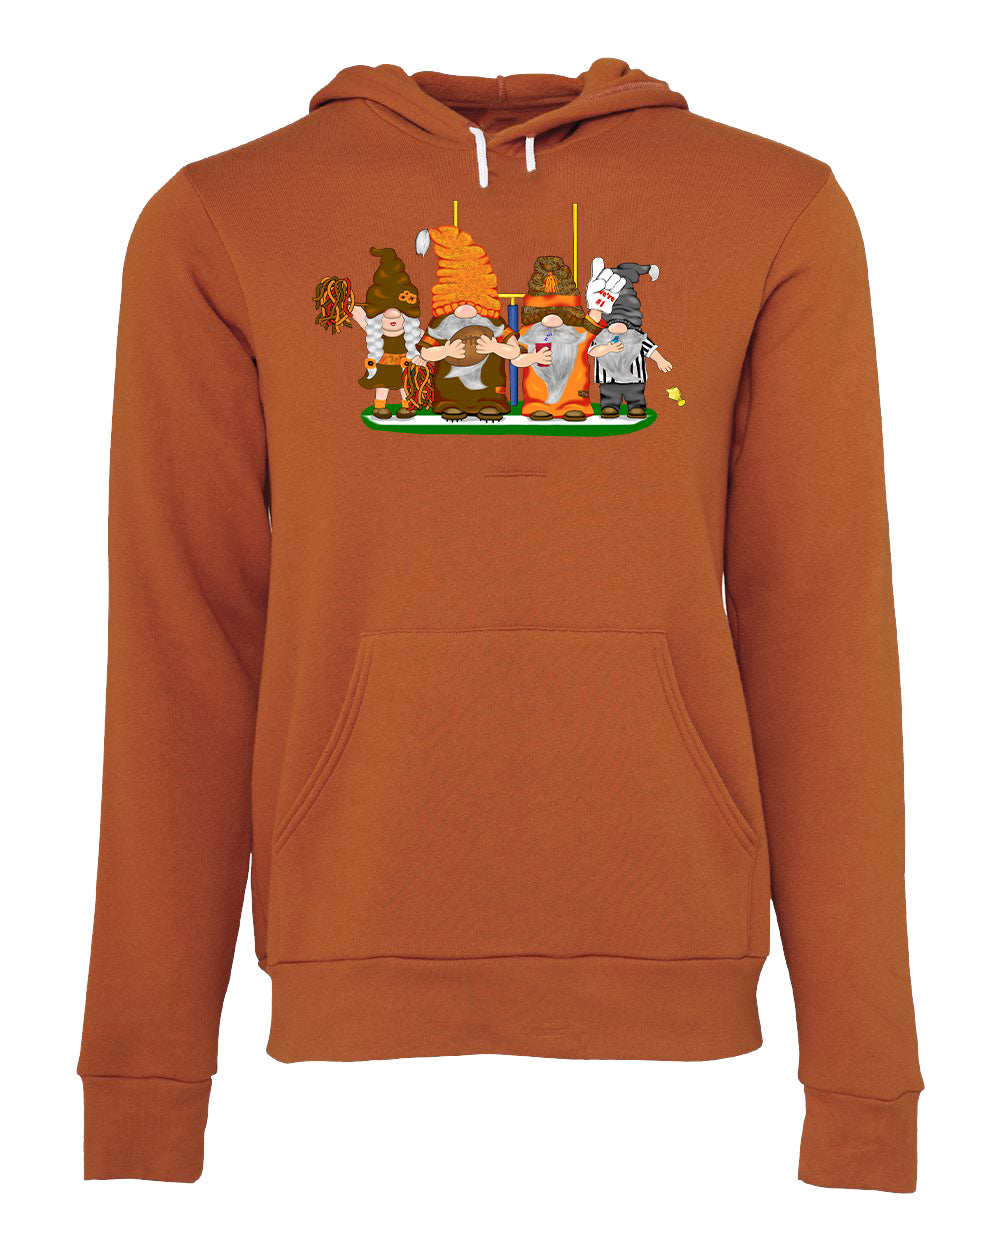 Orange & Brown Football Gnomes (similar to Cleveland) on Unisex Hoodie